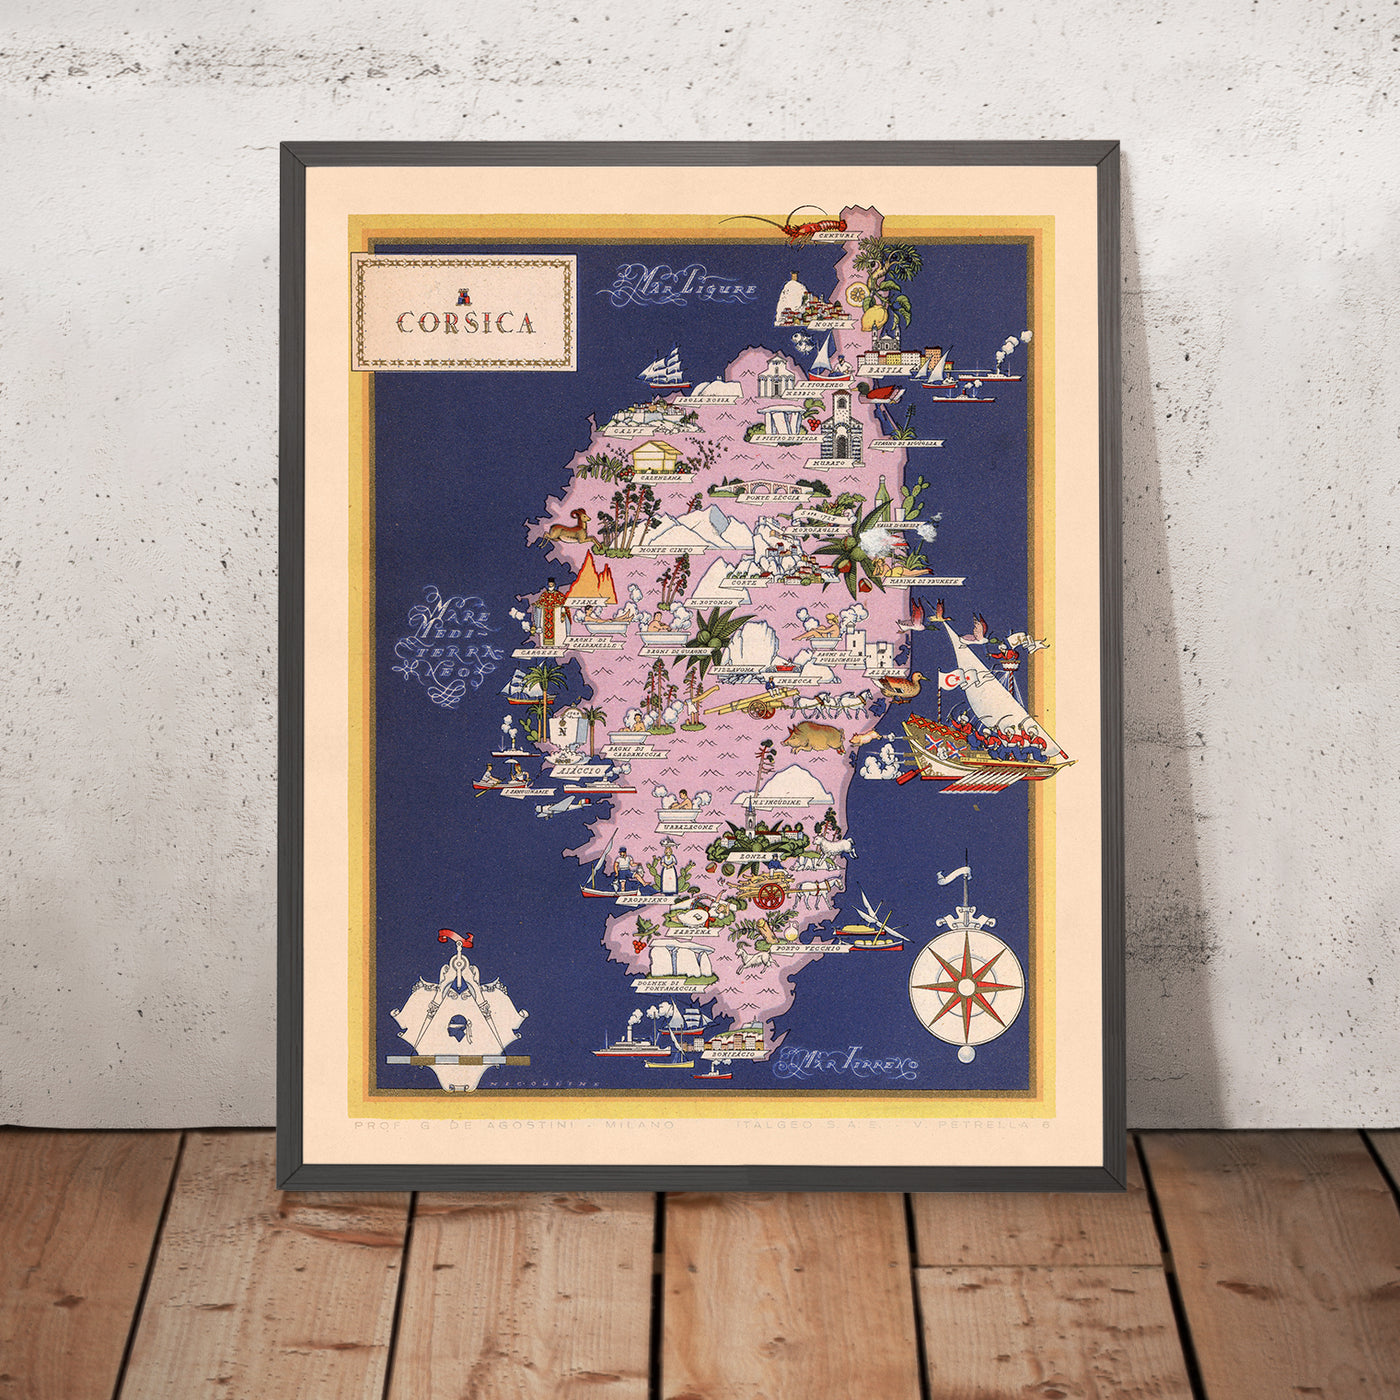 Alte Karte der italienischen Region Korsika, 1938: Bastia, Ajaccio, Calvi, Corte, Porto-Vecchio